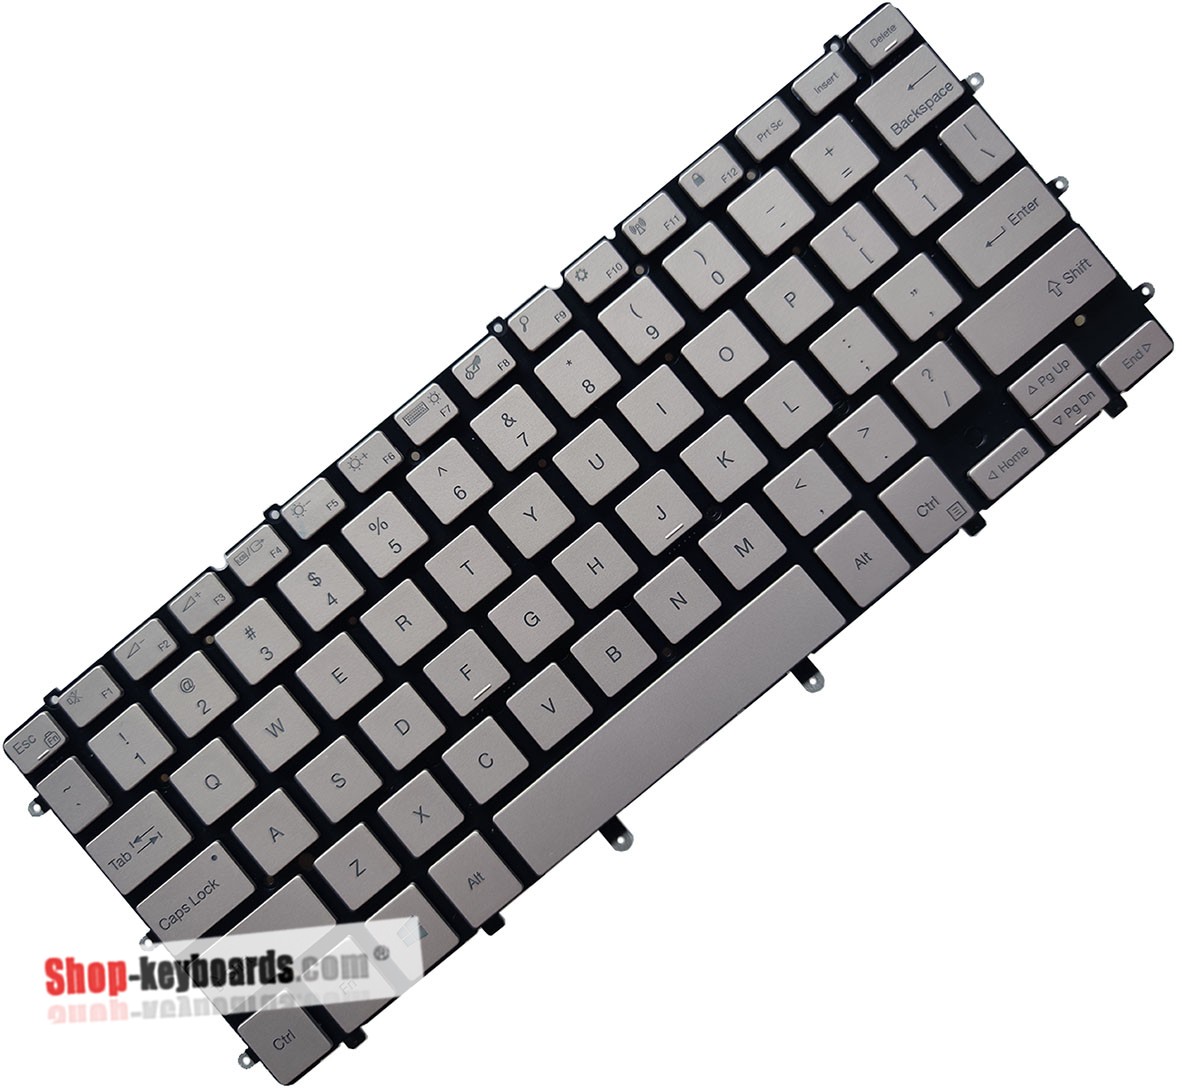 QUANTA AETX7U00020 Keyboard replacement